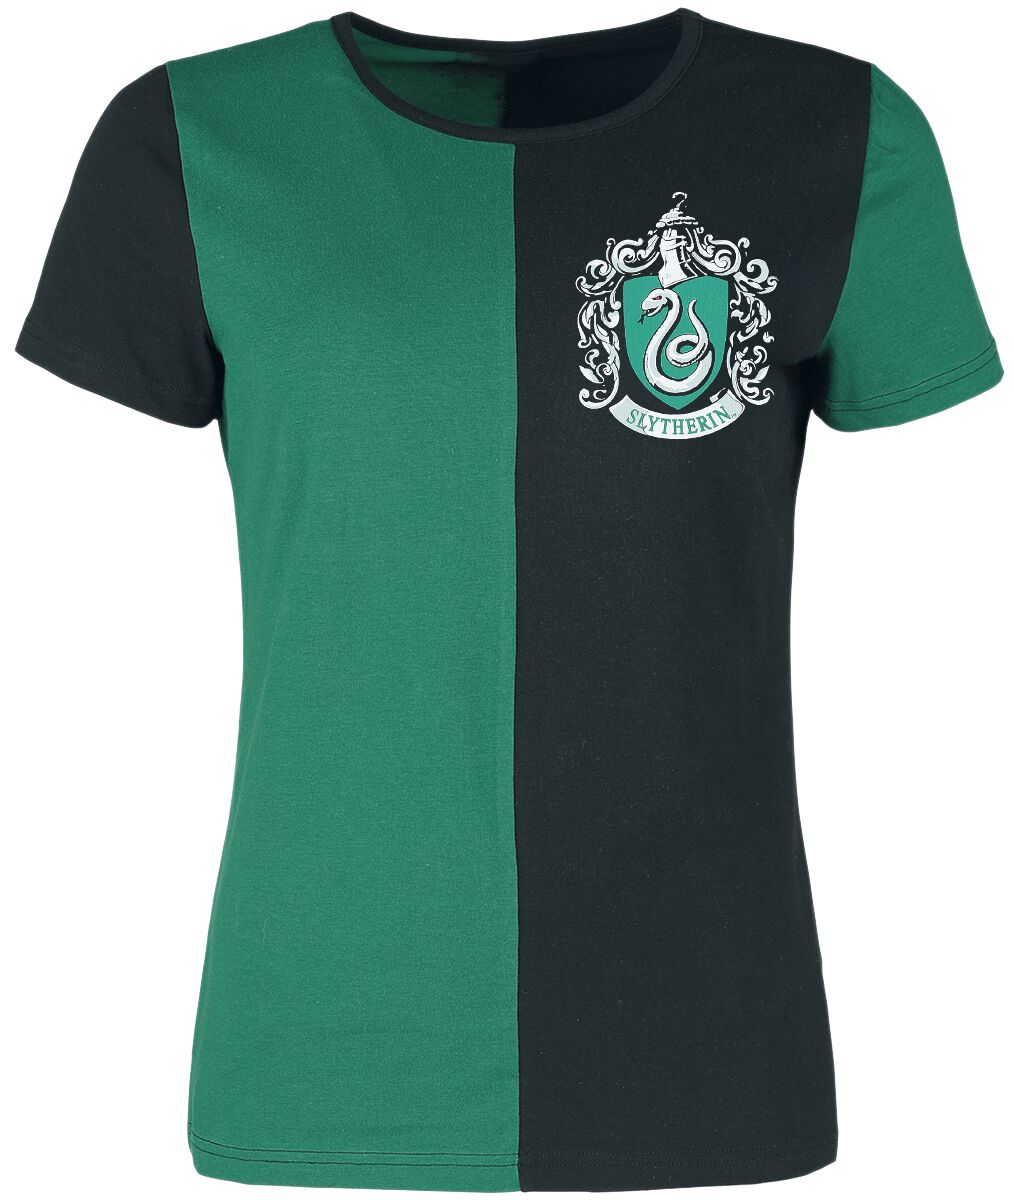 Harry Potter Slytherin T-Shirt green black